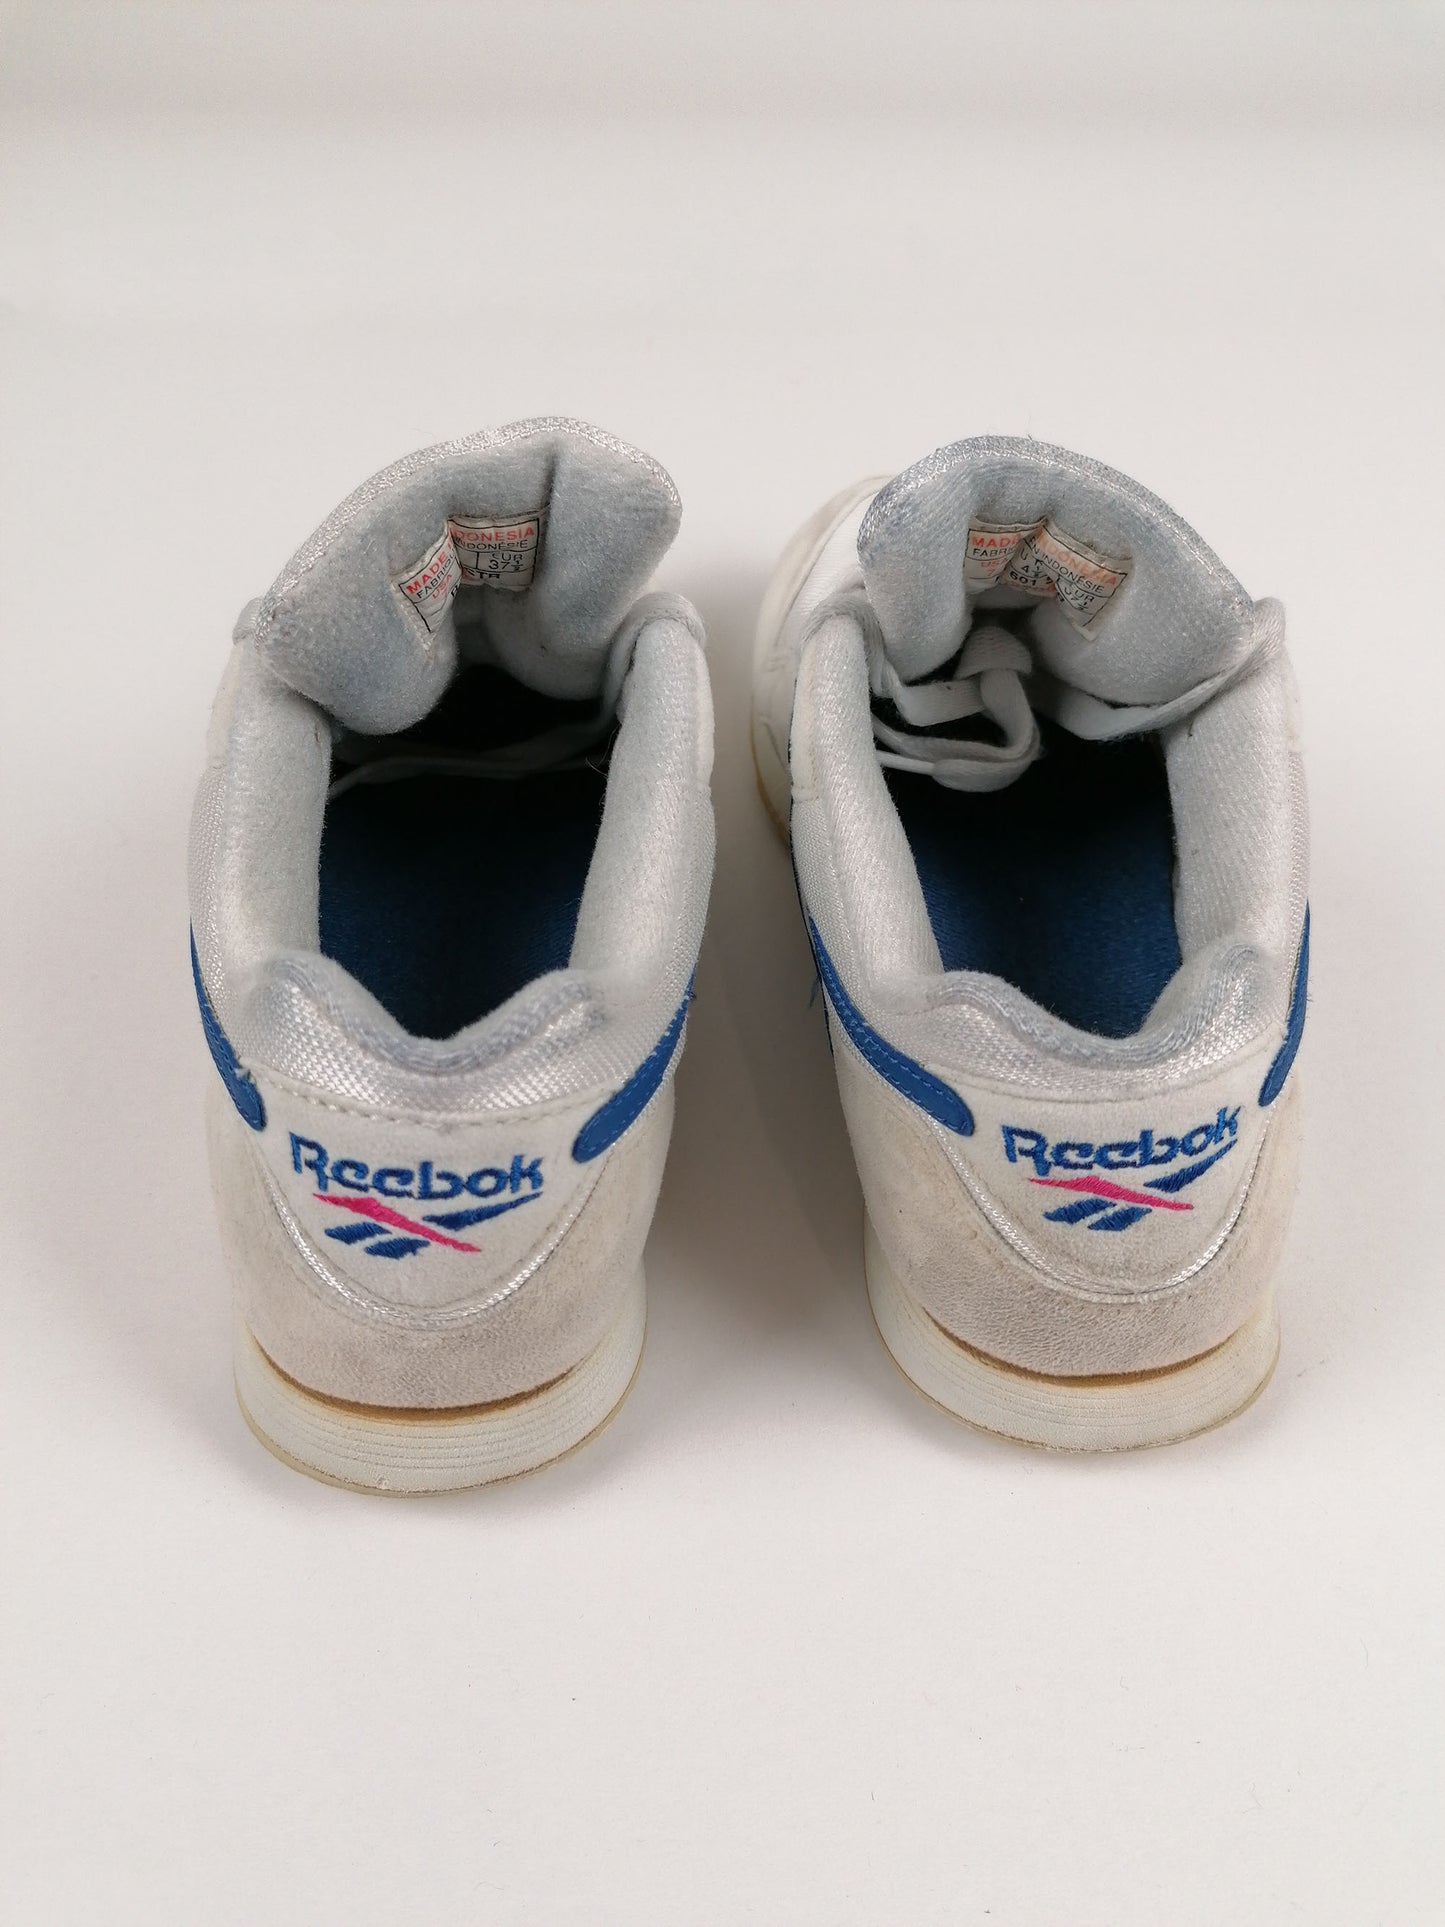 Vintage 90's REEBOK Classic Retro Sneakers White Nylon Trainers Women - size EU 37.5 / UK 4.5 / us 6.5